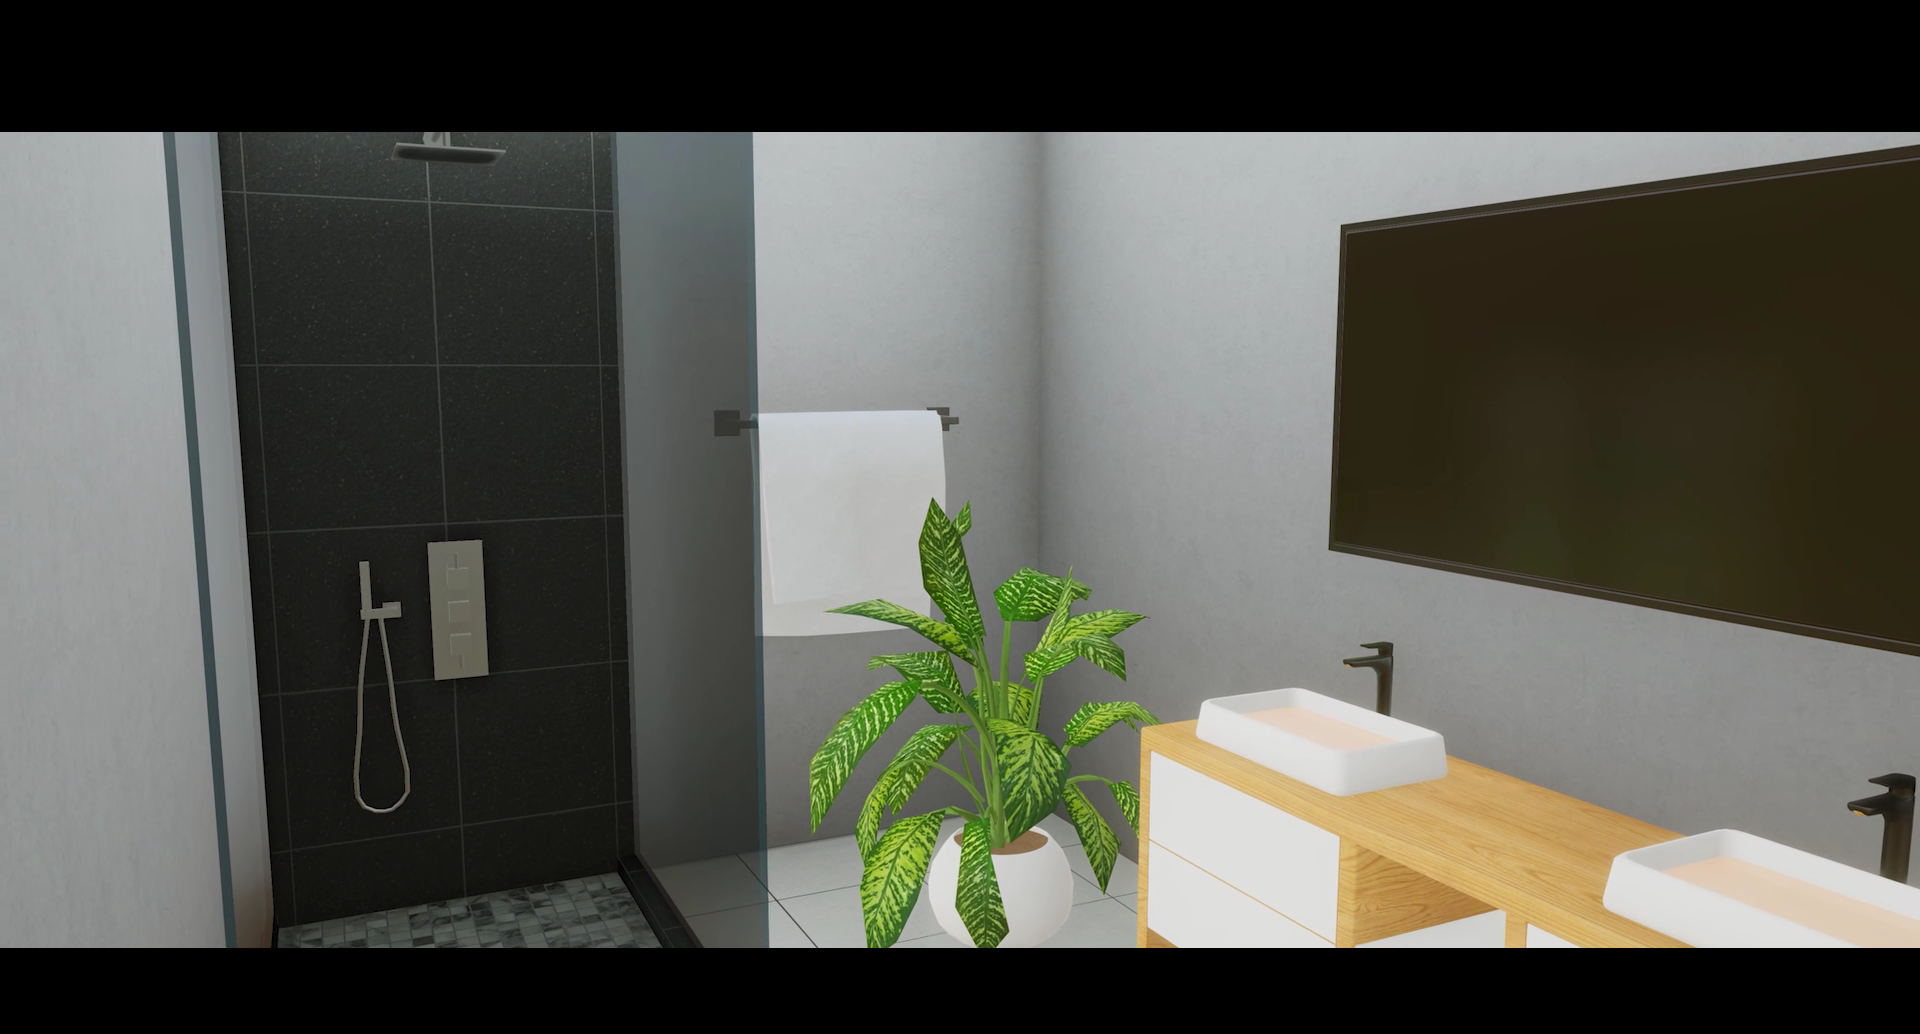 Hotel Life : A Resort Simulator Xbox Series X & S